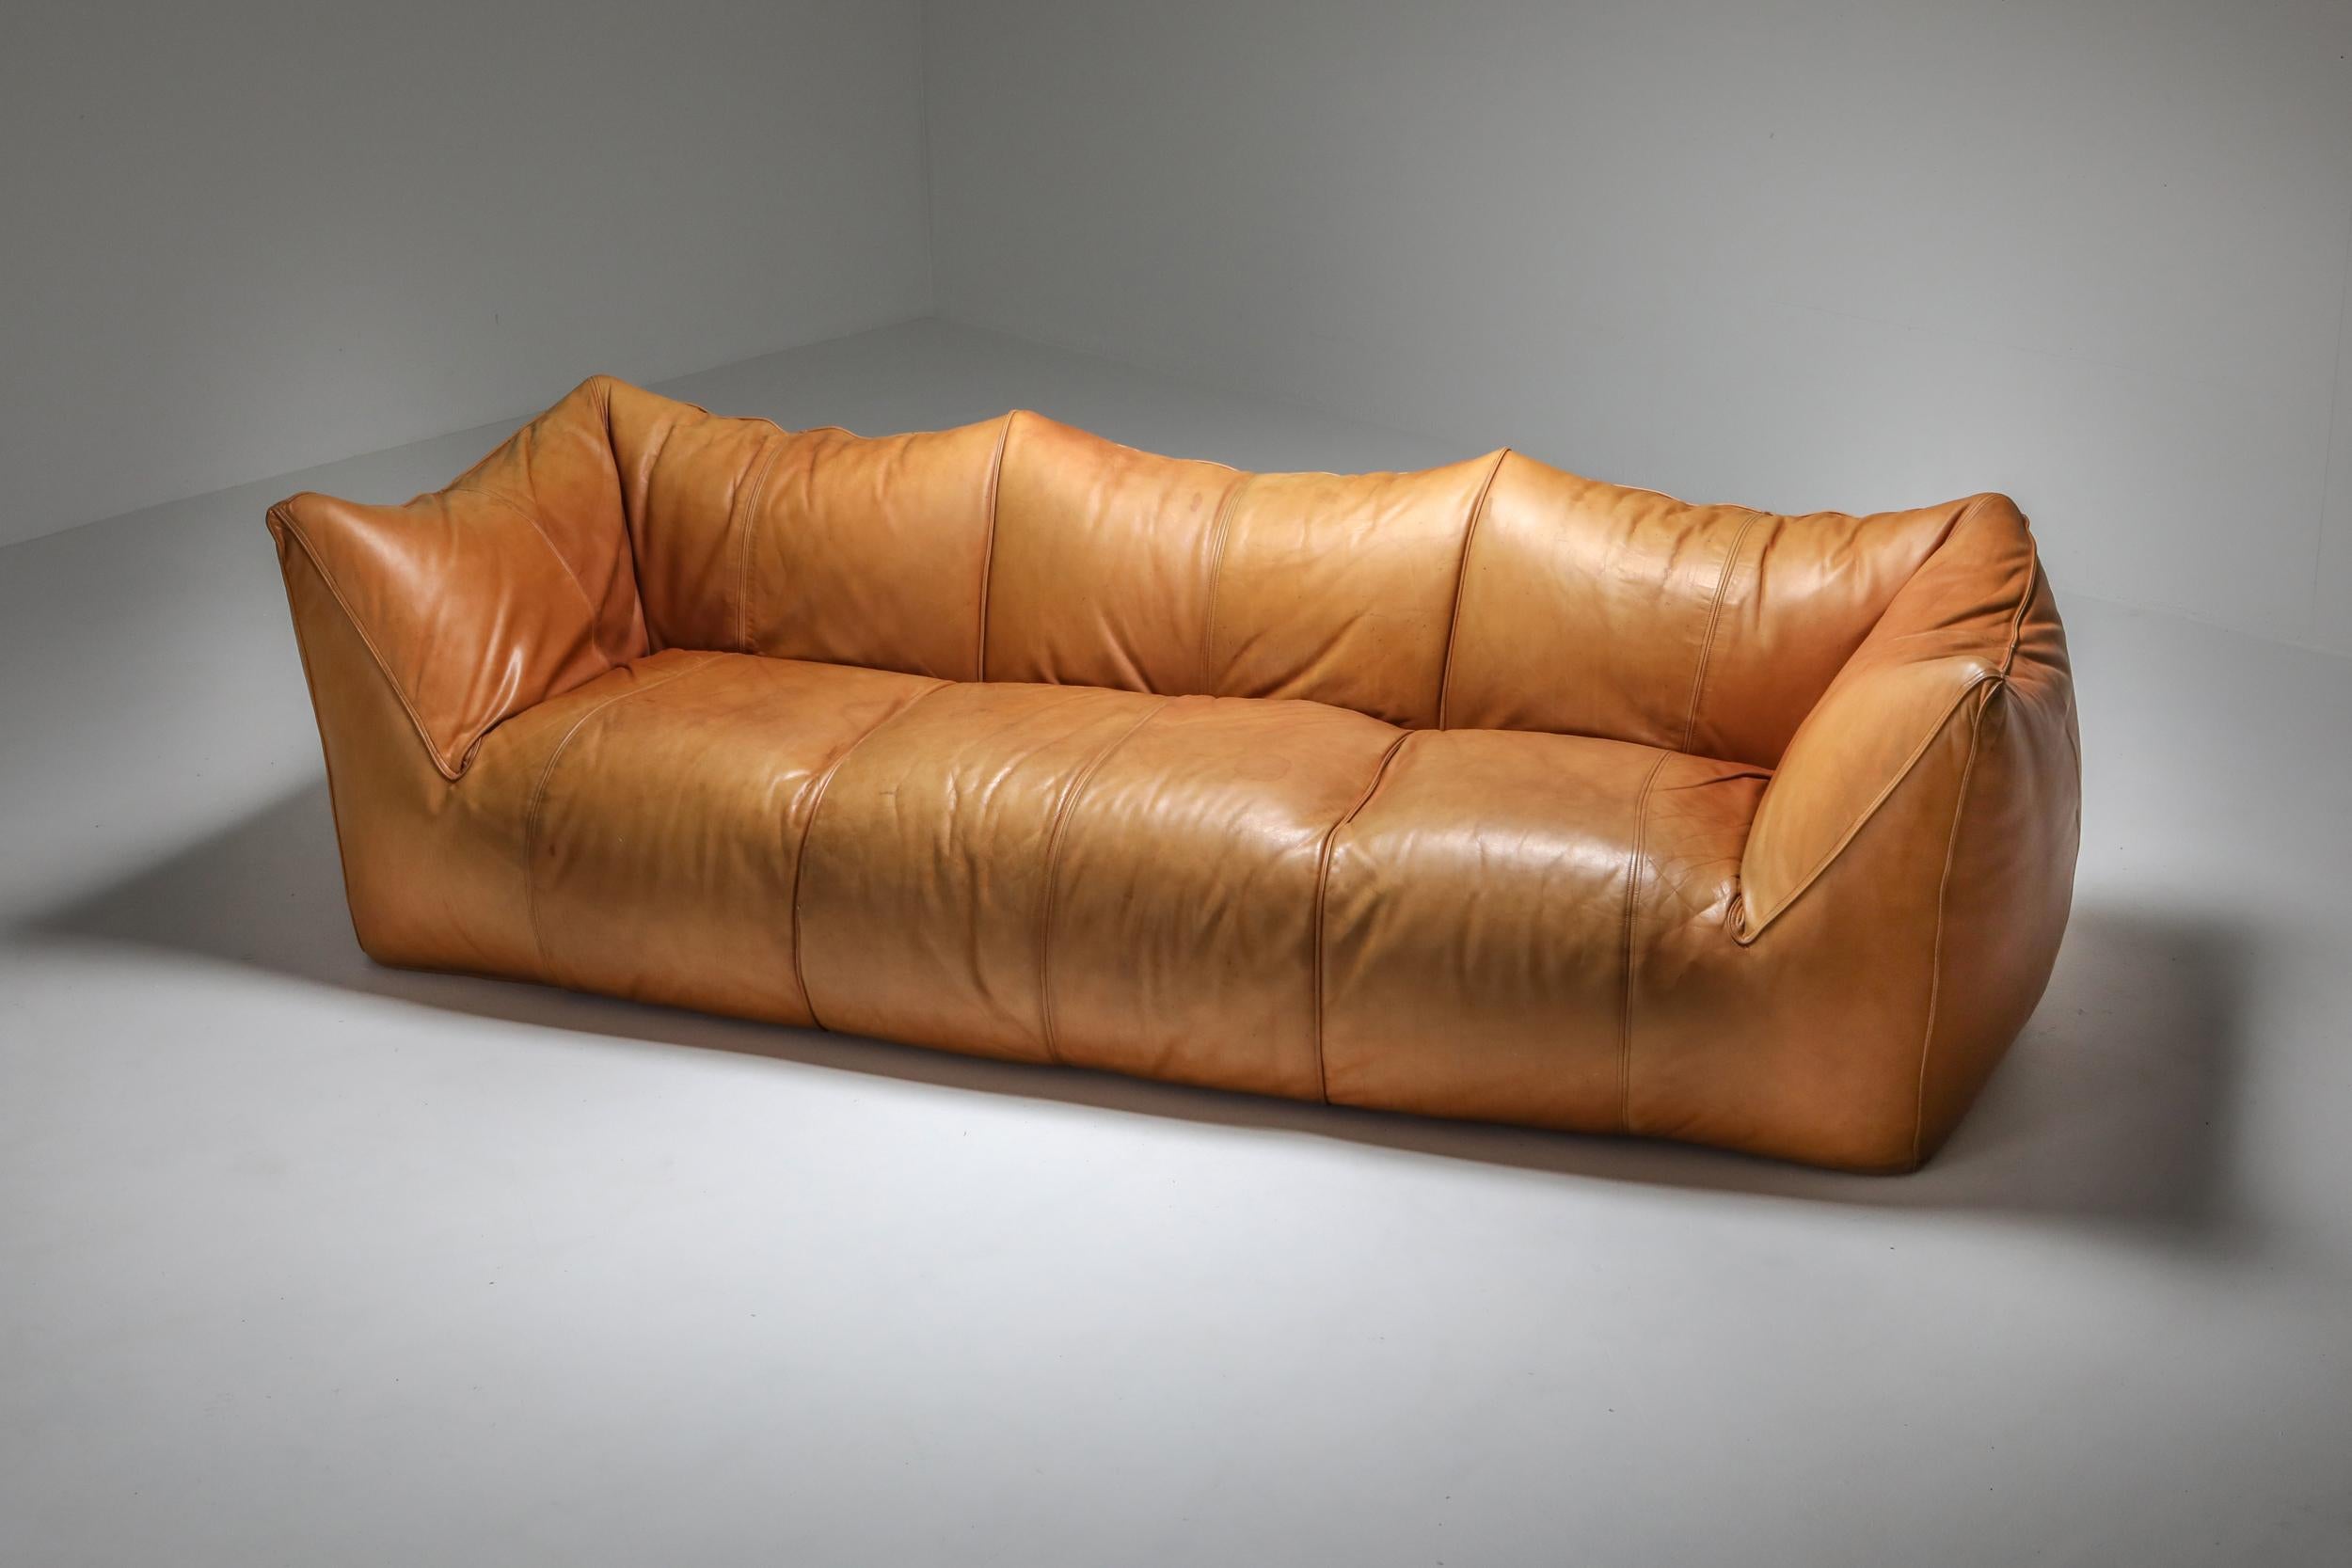 Italian Mario Bellini 'Le Bambole' Three-Seat Couch in Tan Leather